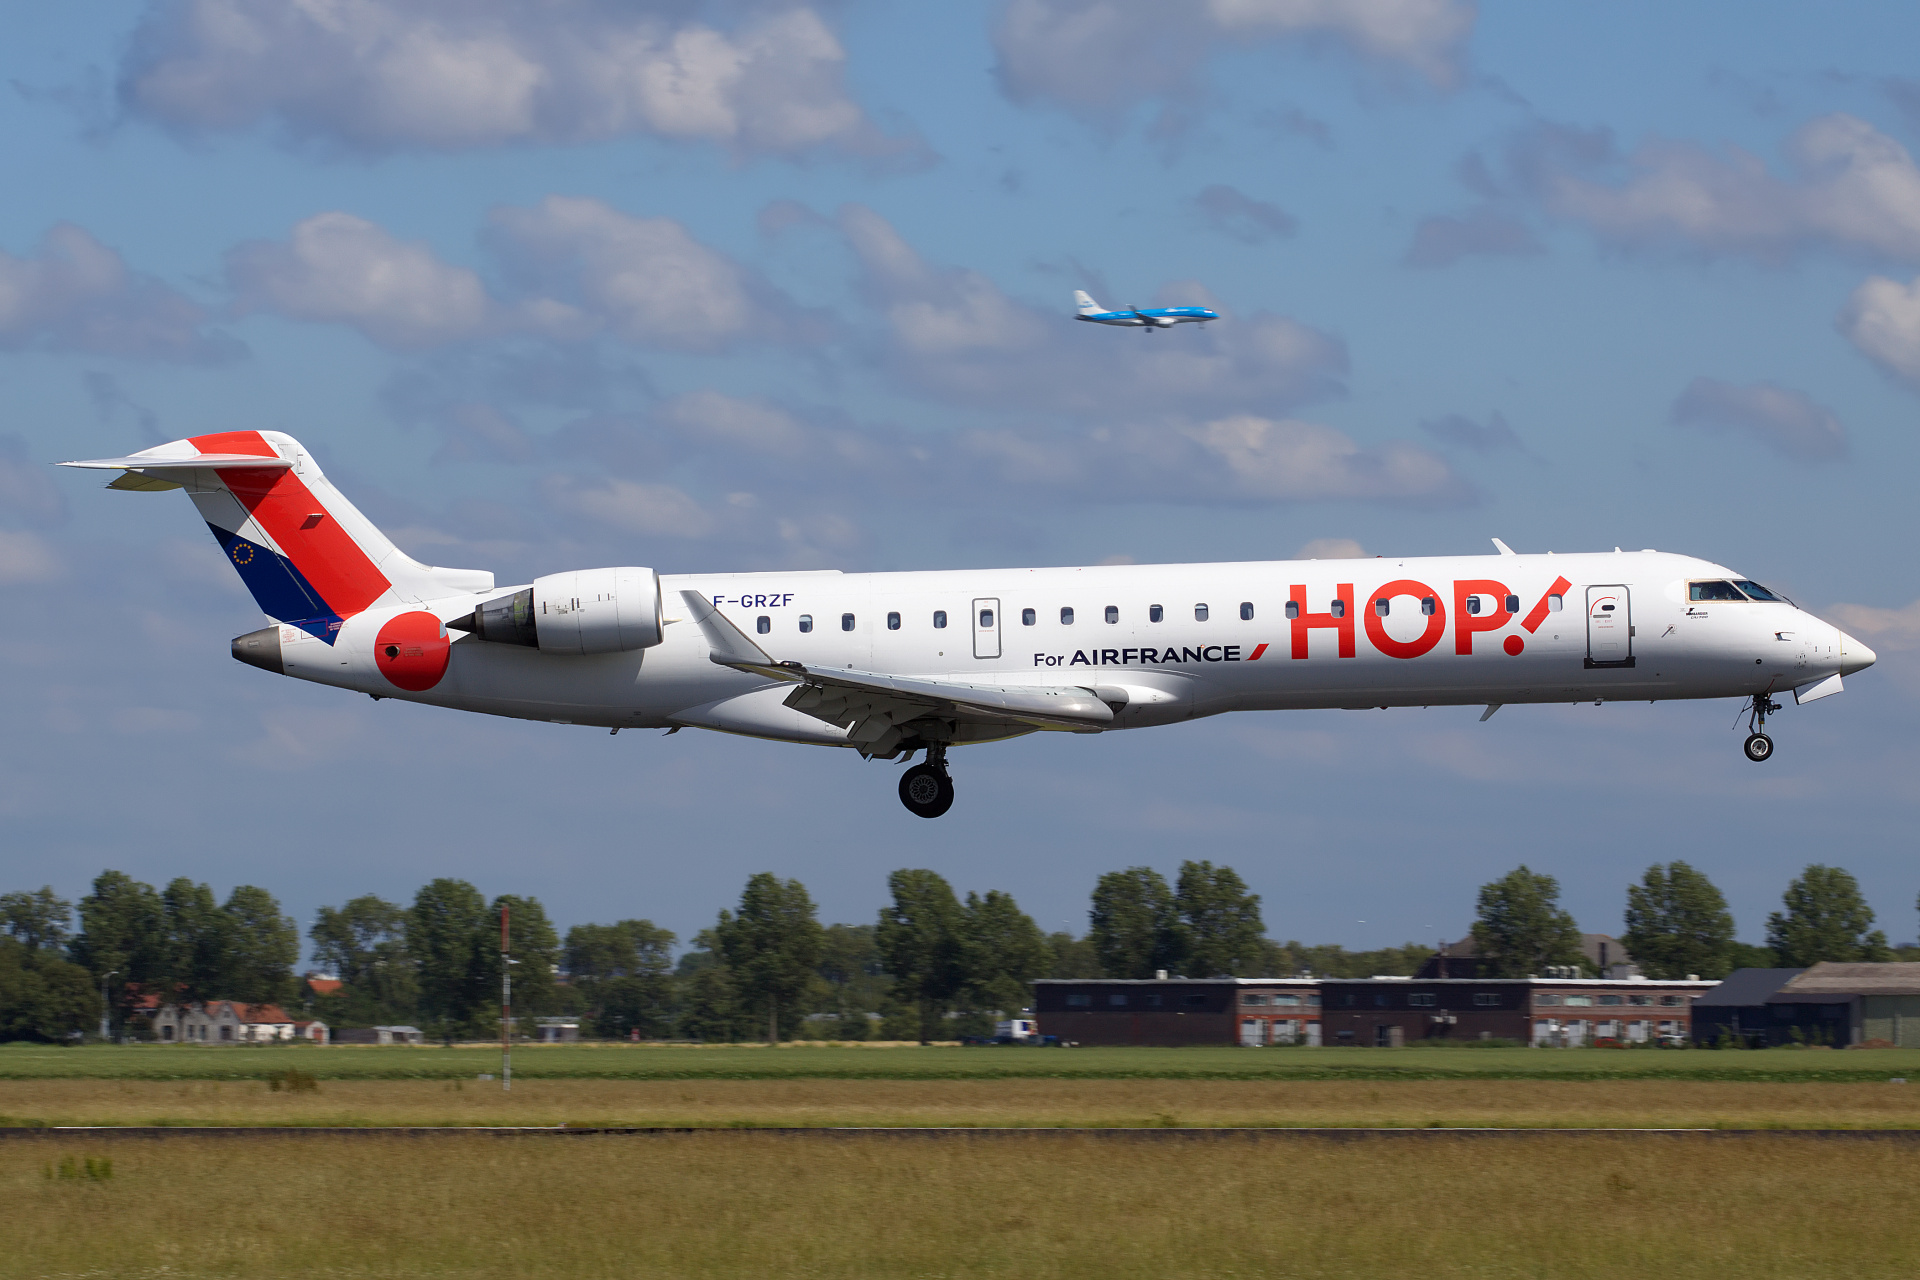 F-GRZF, HOP! (Aircraft » Schiphol Spotting » Mitsubishi CL-600 Regional Jet » CRJ-700)